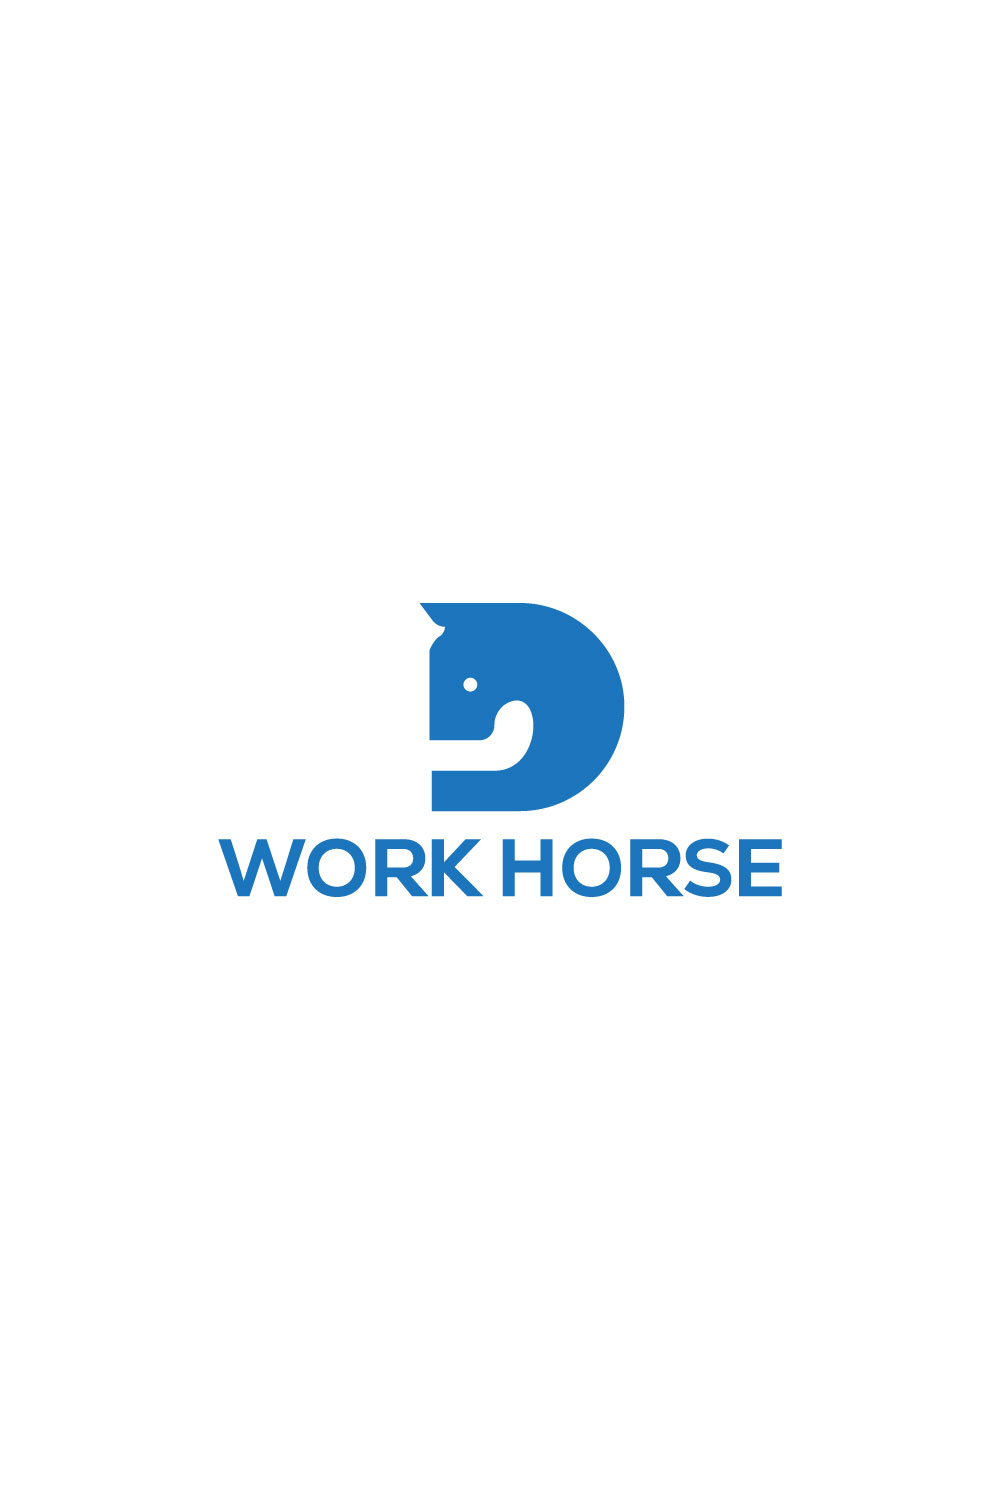 Horse logo design pinterest preview image.